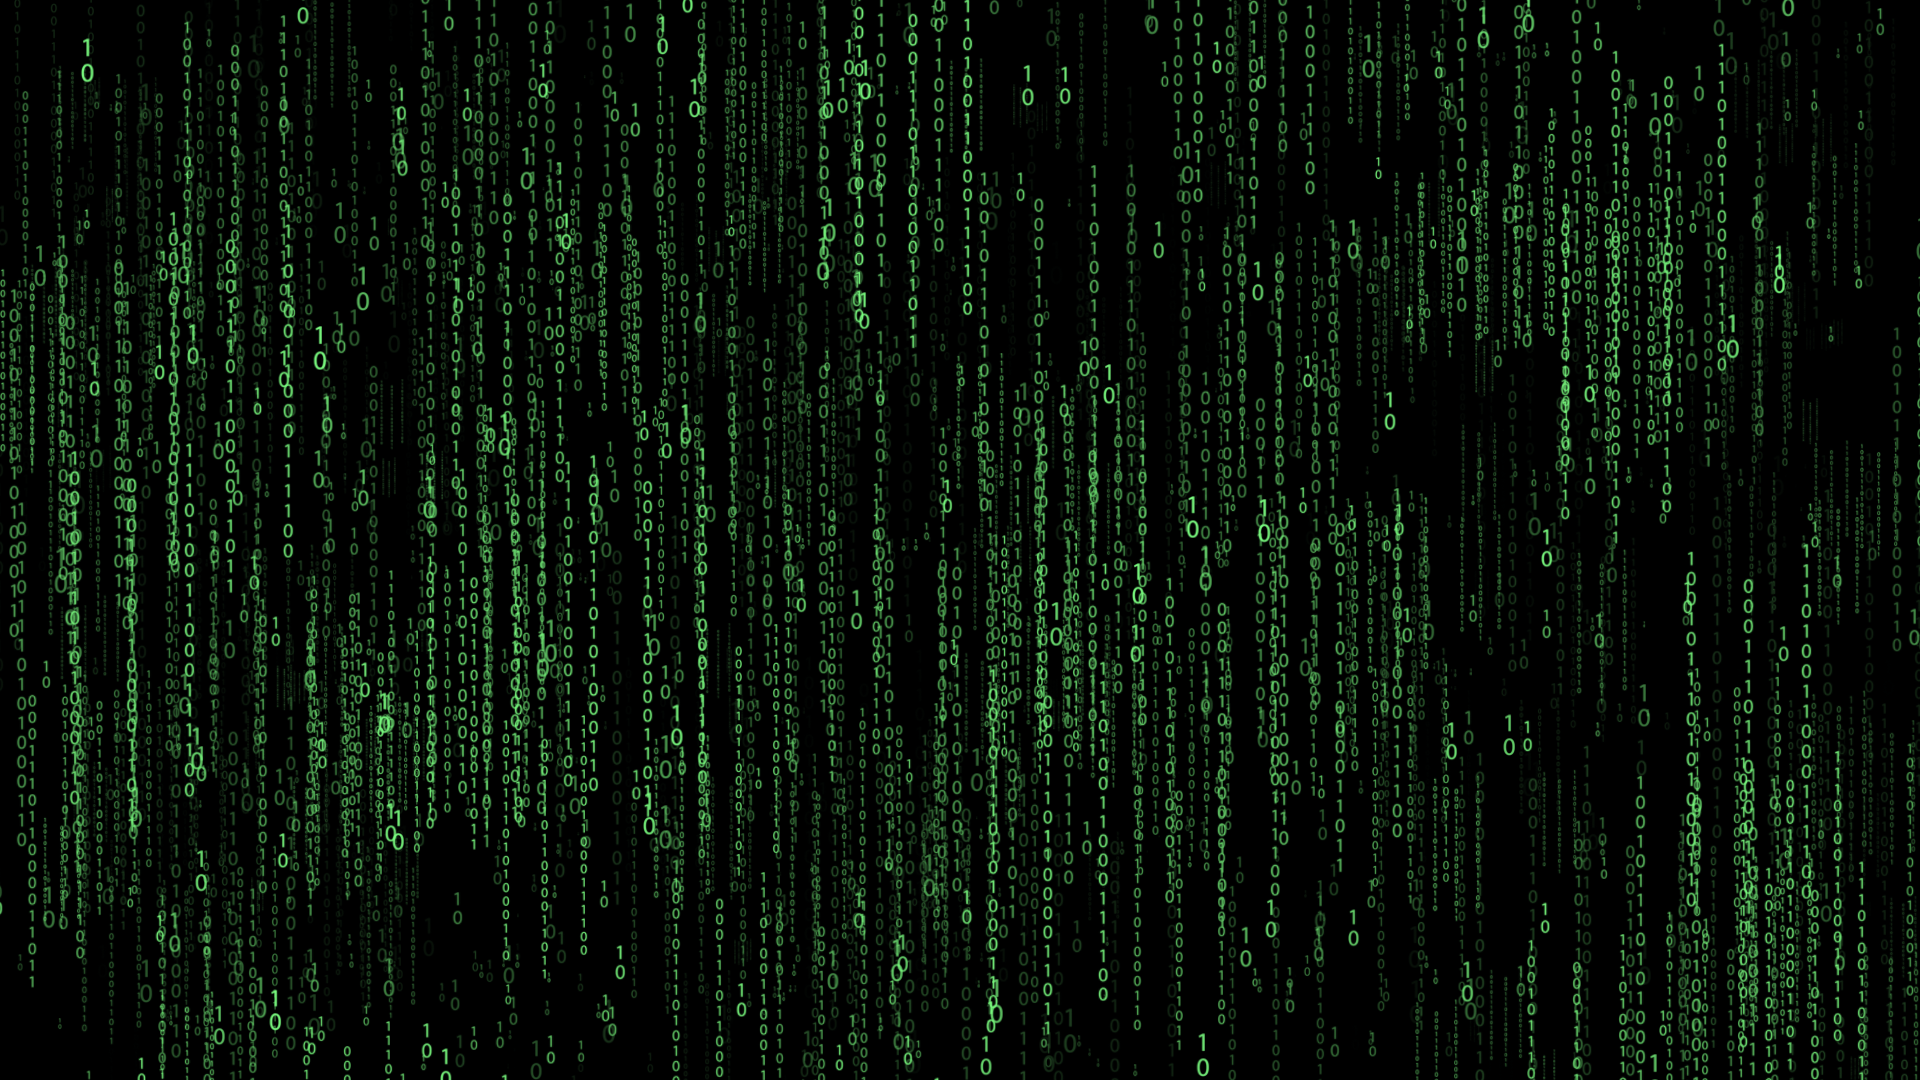 Matrix Binary Code wallpaper By Treshku by TreshkuDrago on